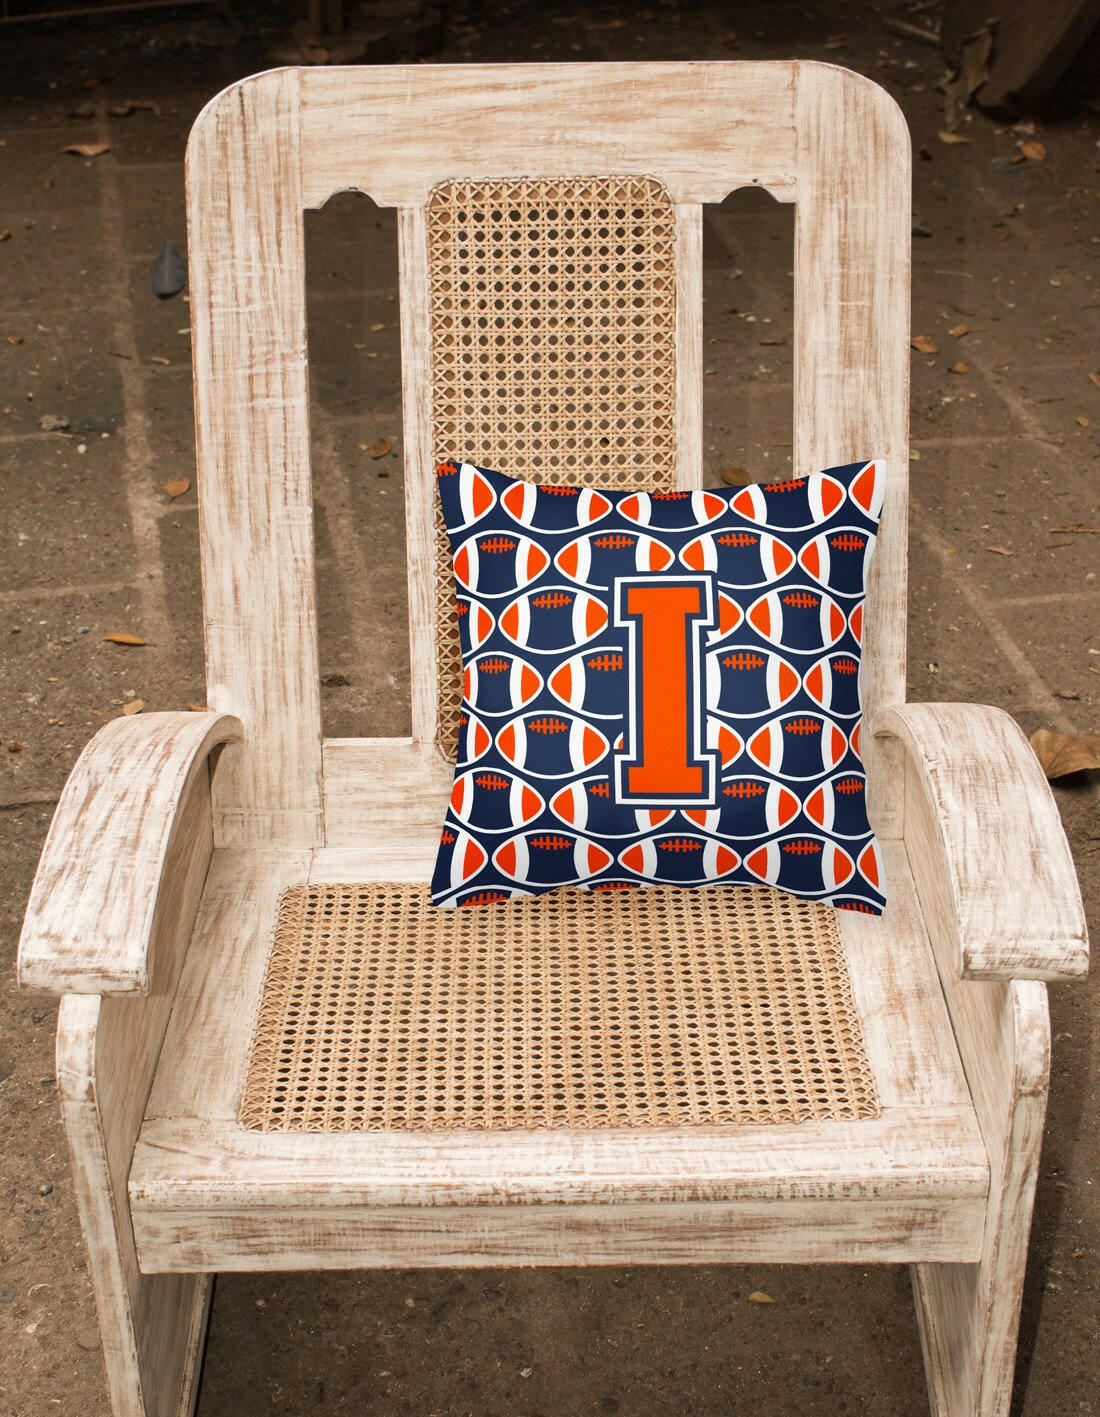 Letter I Football Orange, Blue and white Fabric Decorative Pillow CJ1066-IPW1414 by Caroline's Treasures